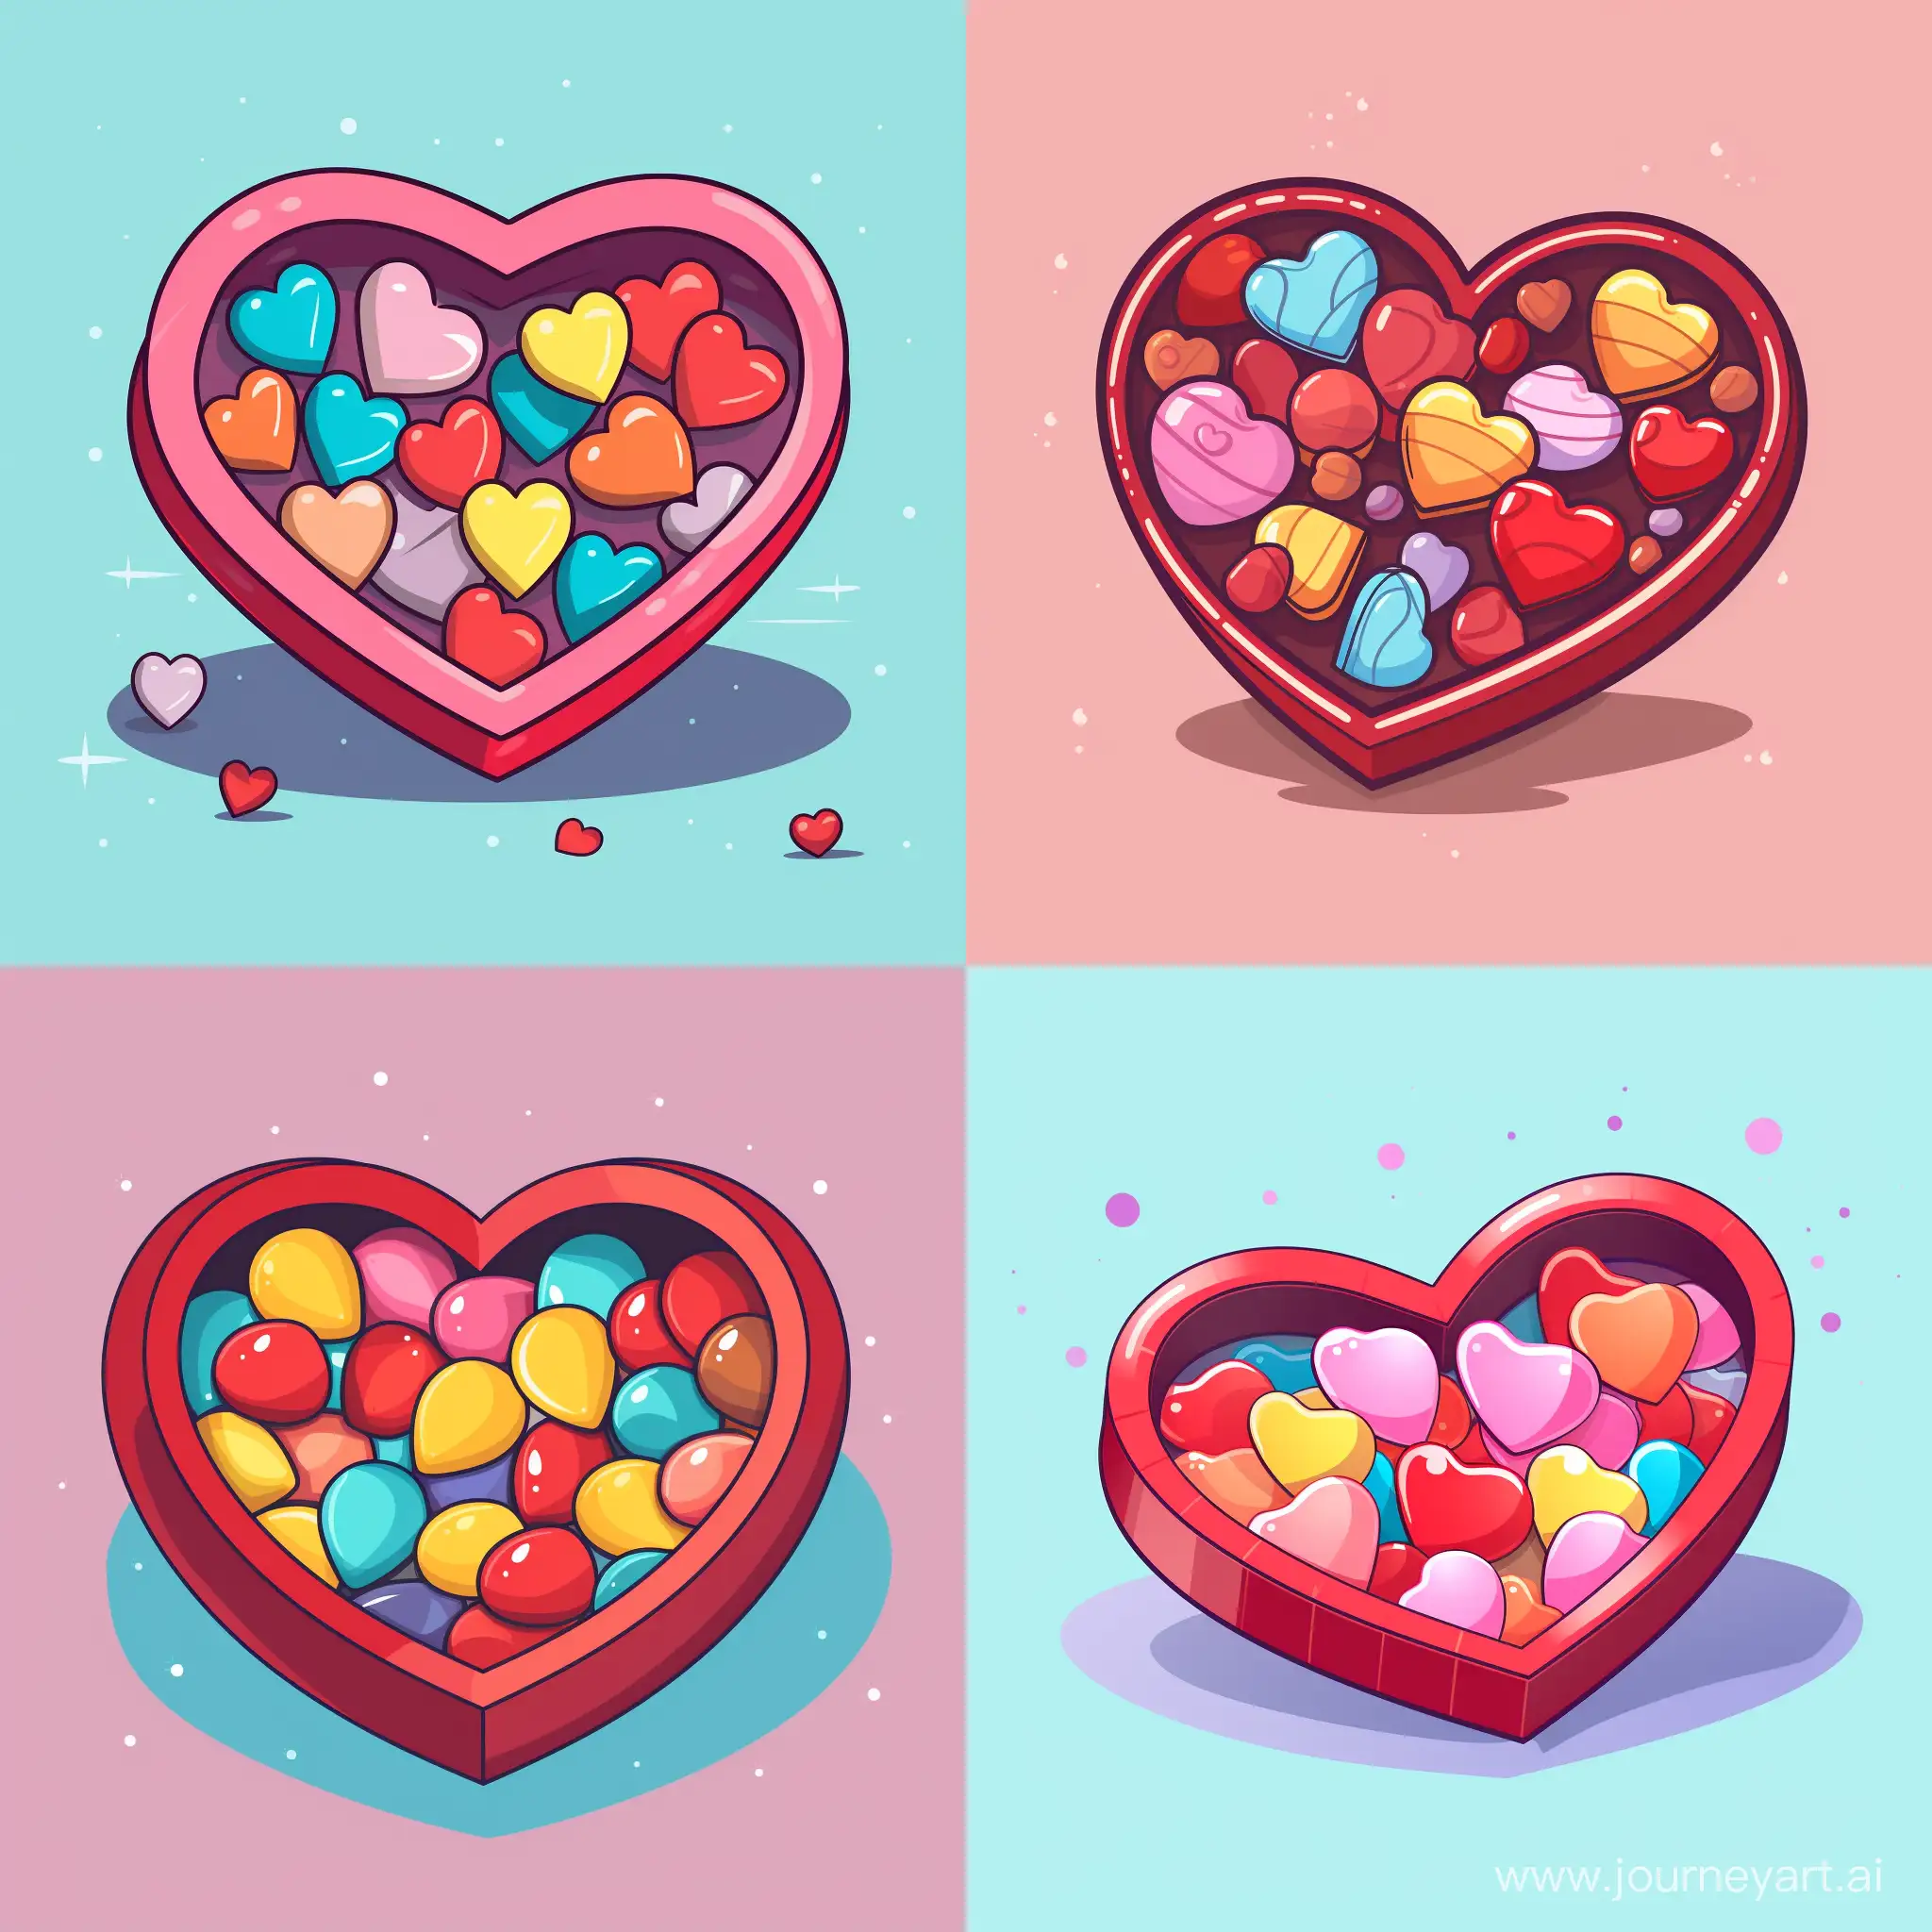 Empty candy heart box cartoon 2d sEmpty candy heart box cartoon 2d styletyle